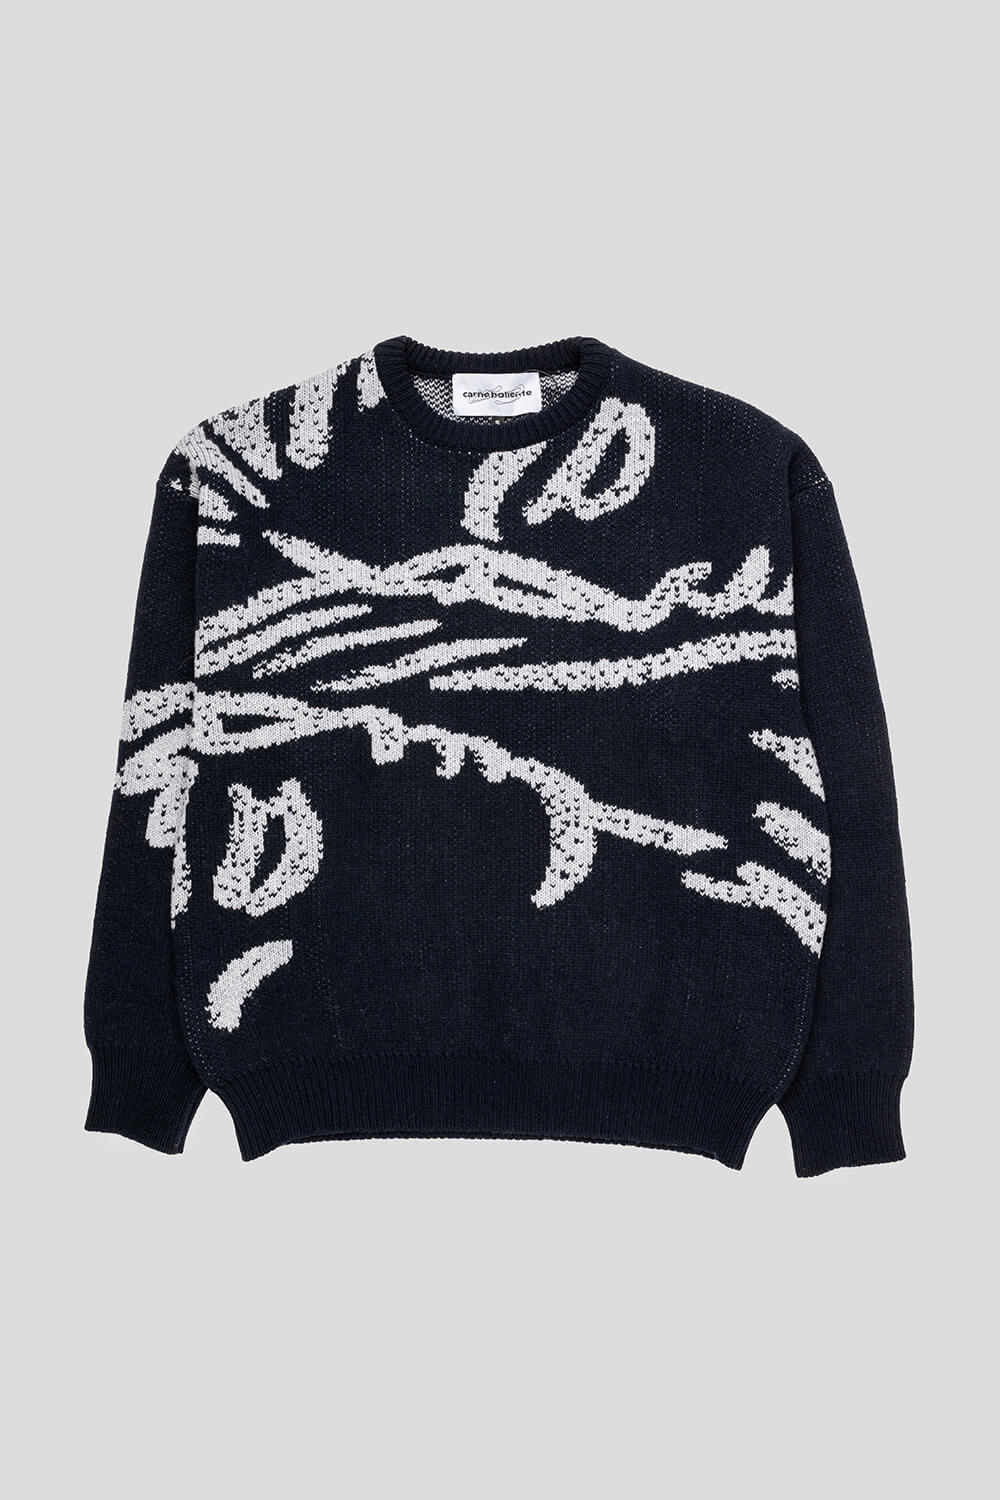 Romeo and Julio Knit Sweater